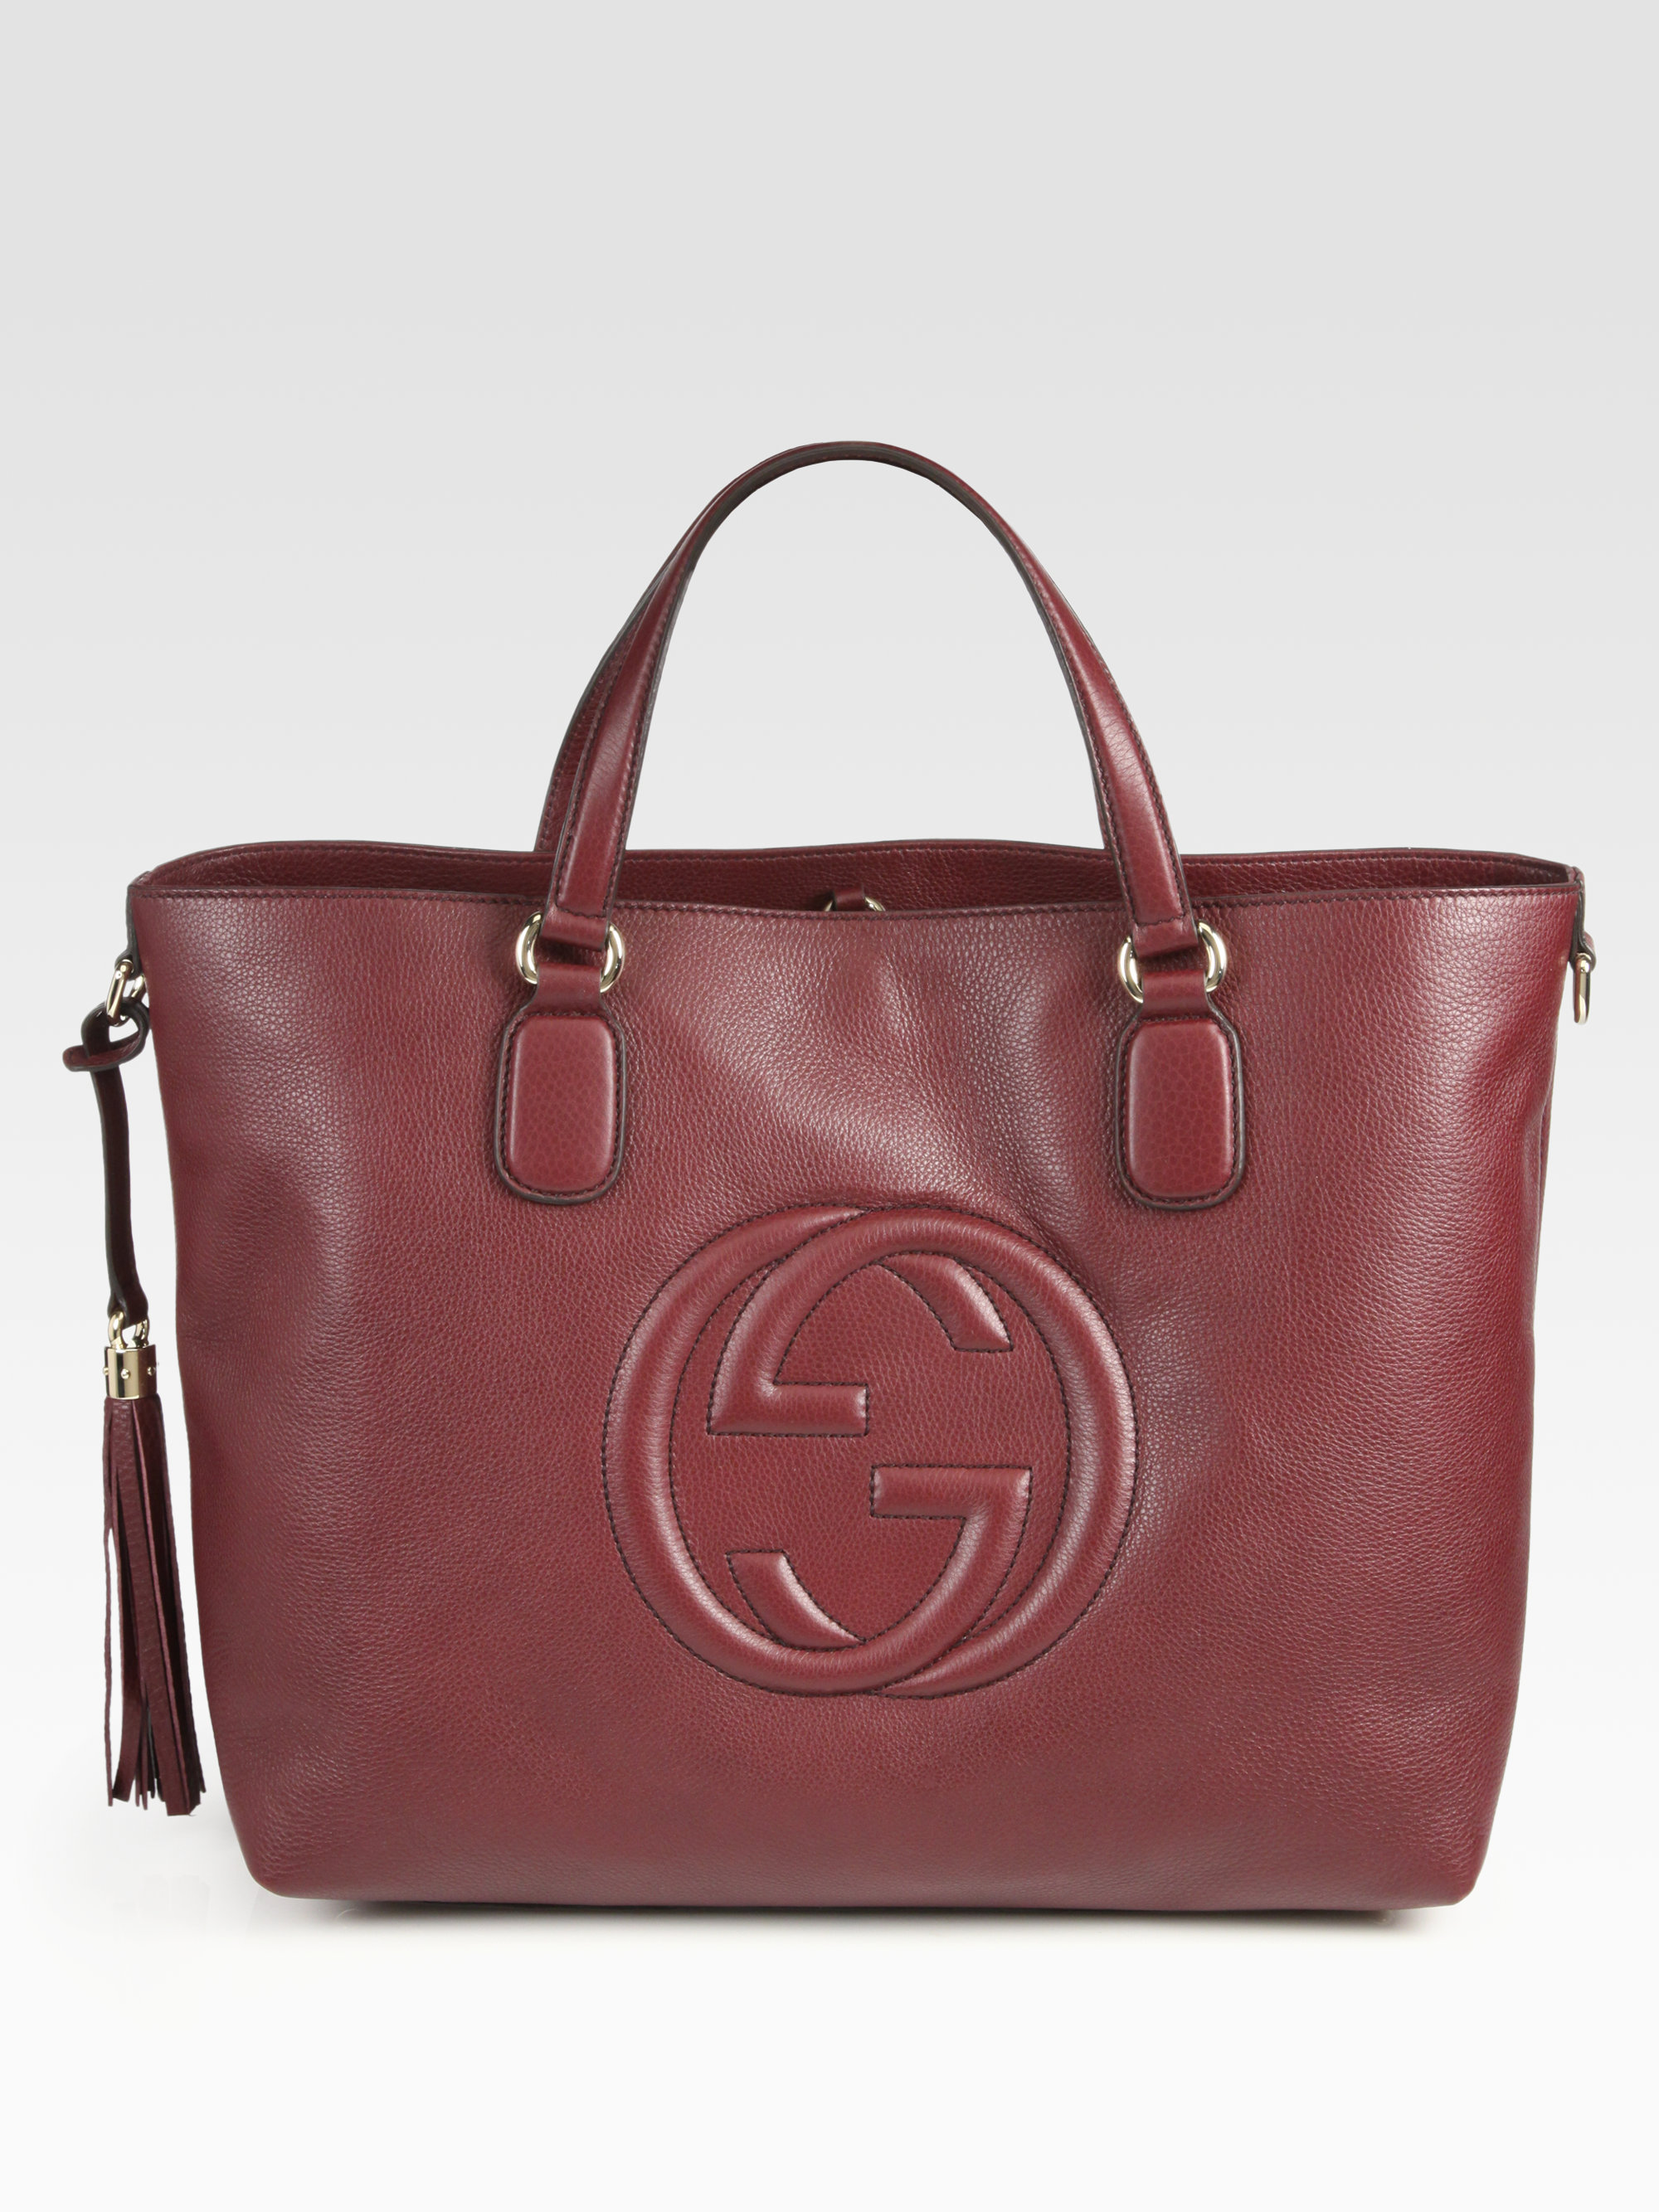 Gucci Soho Medium Tote Bag in Red (burgundy) | Lyst